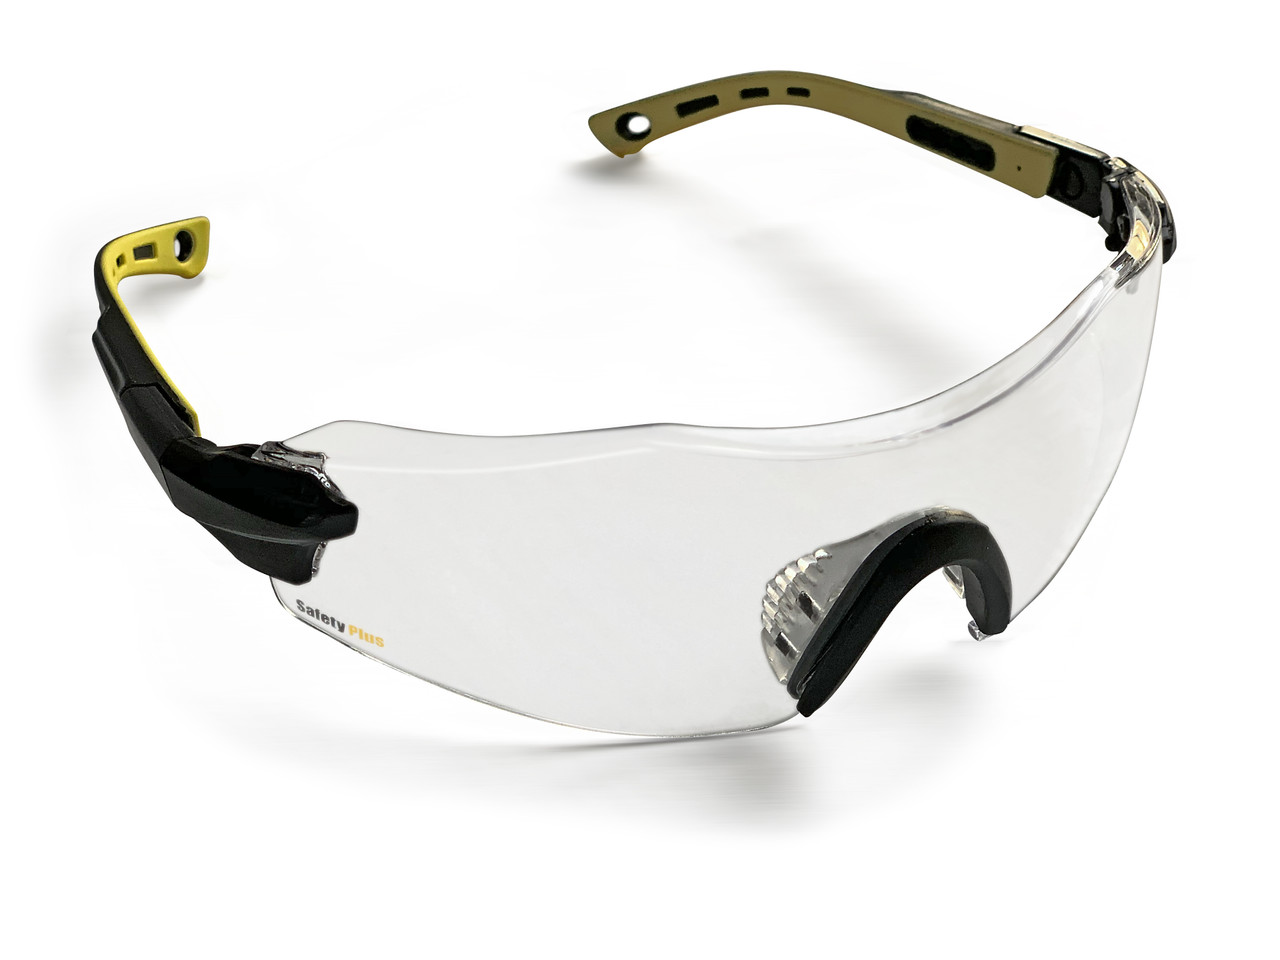 SafetyPlus Spg801cl Safety Glasses (Clear Lens) - ANSI Z87.1 Standards, Scratch Resistant, Wrap Around Lens, Non-Slip Grip, Adjustable Temple & Hinges